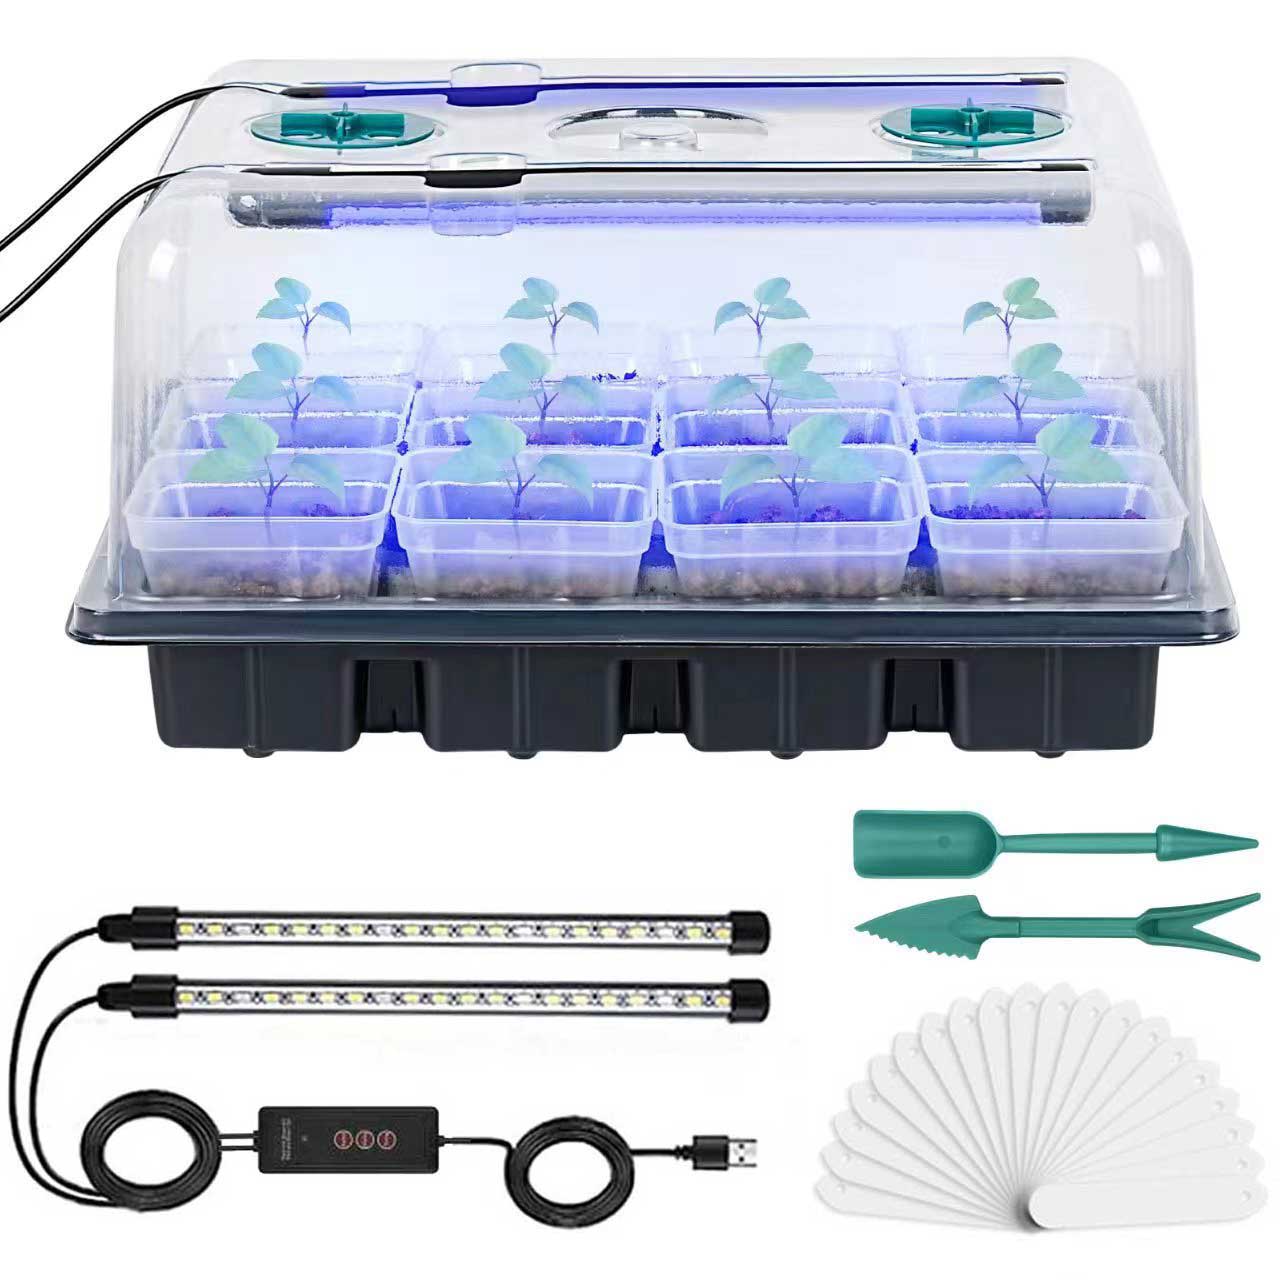 3 inch Square Nursery Pots  Seed Starter Trays 12 Pcs Small Planter Nursery Propagation 1 Sets - White&Blue Fullspectrum Growth Light